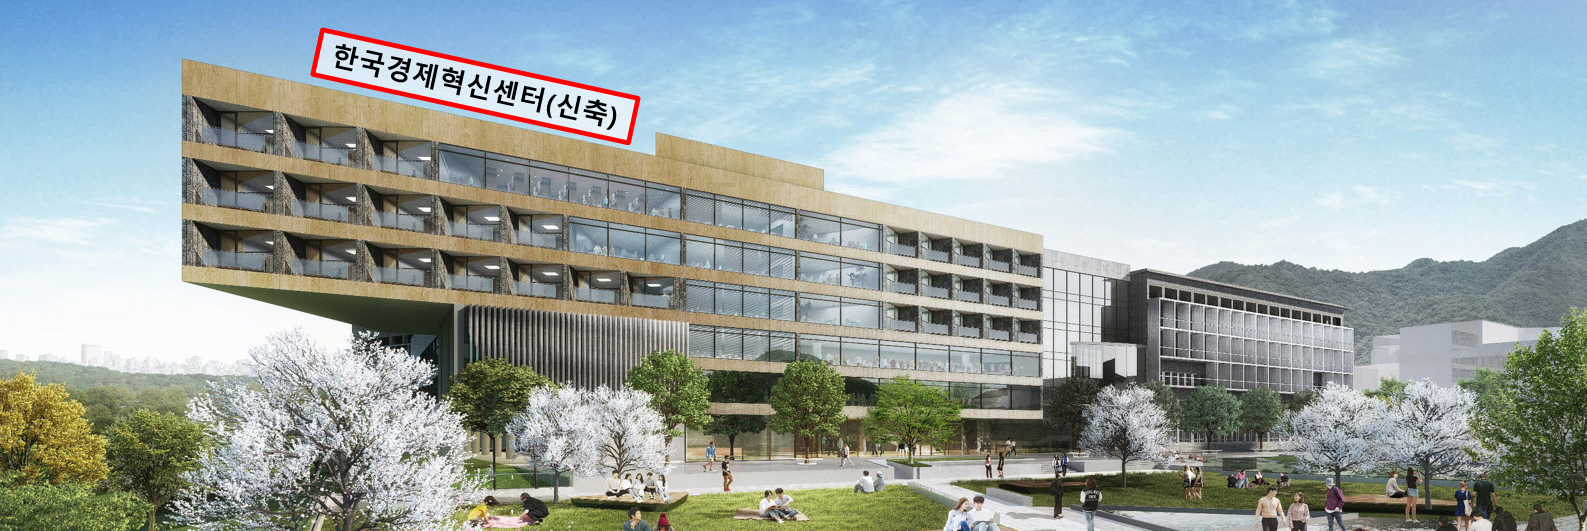 Korea Bureau of Economic Research and Innovation